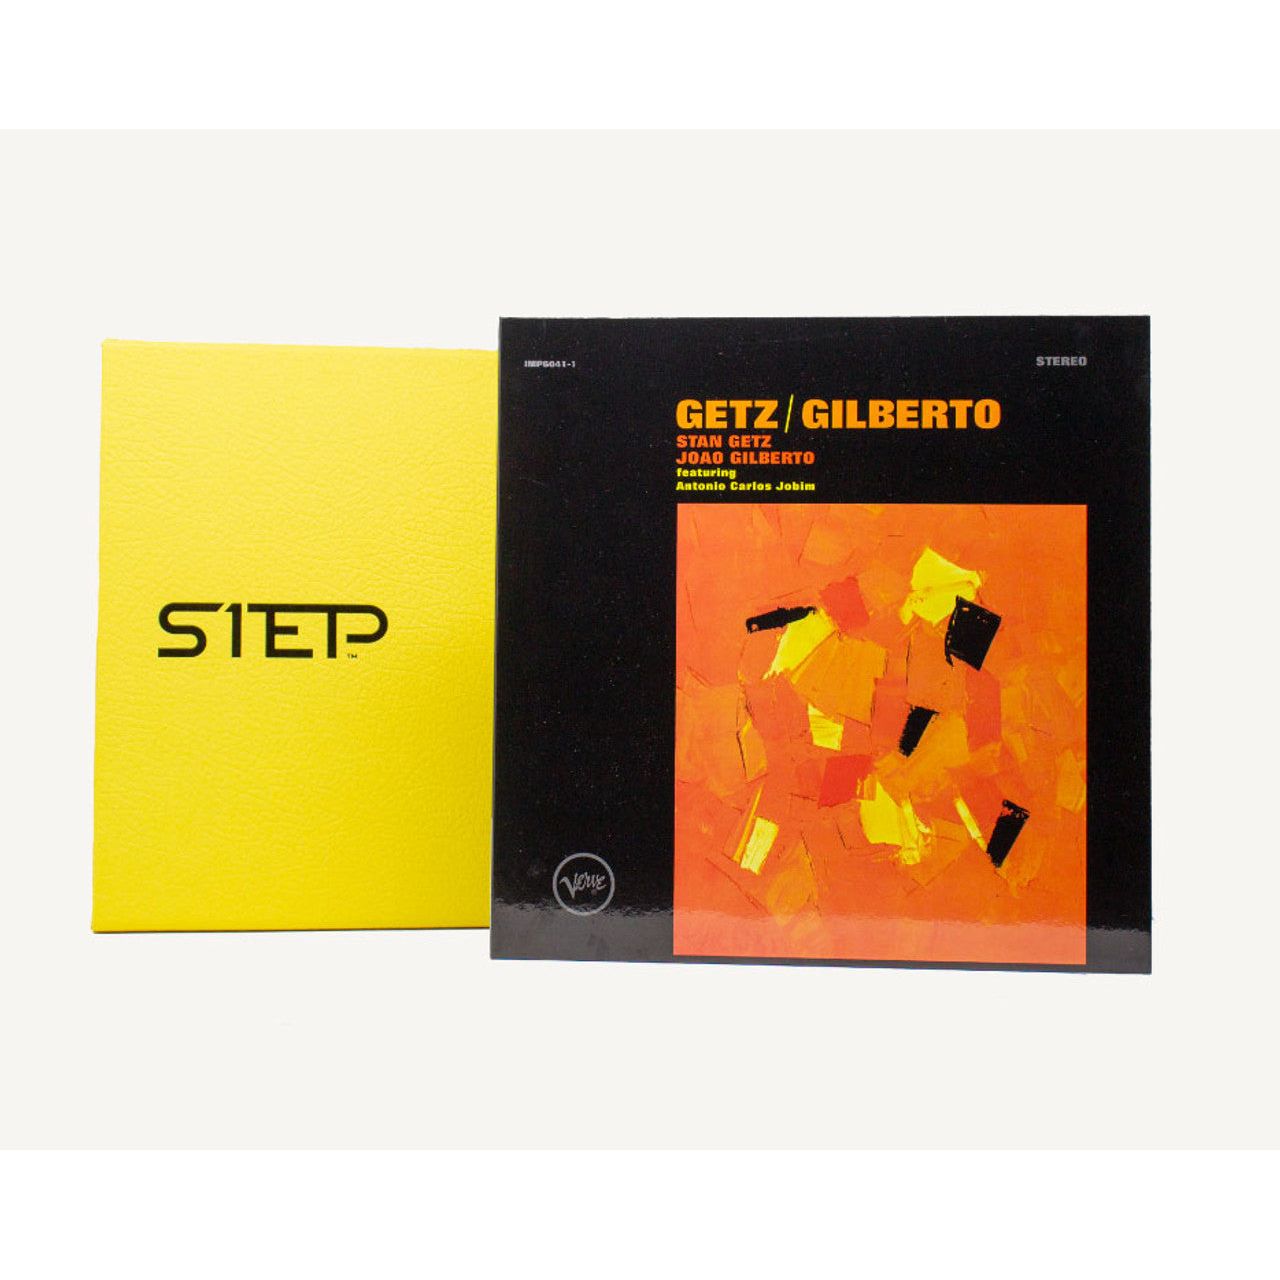 Stan Getz & Joao Gilberto - Getz/Gilberto - Impex 1STEP 45rpm LP